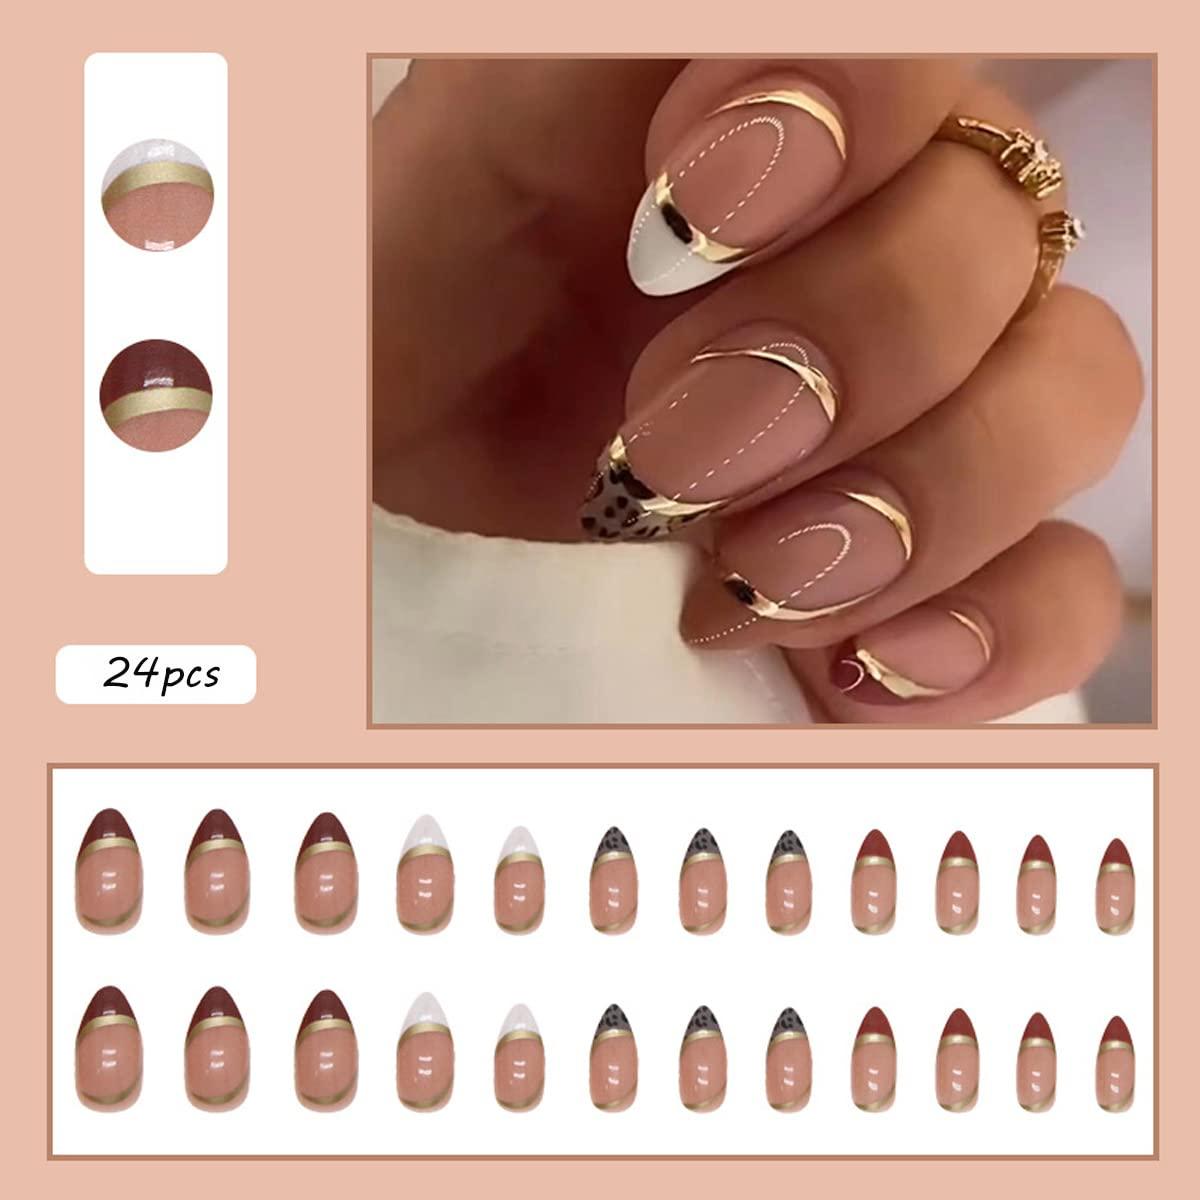 Almond-Shaped Glitter French Acrylic Nails  French acrylic nails, Almond  nails designs, Glitter tip nails